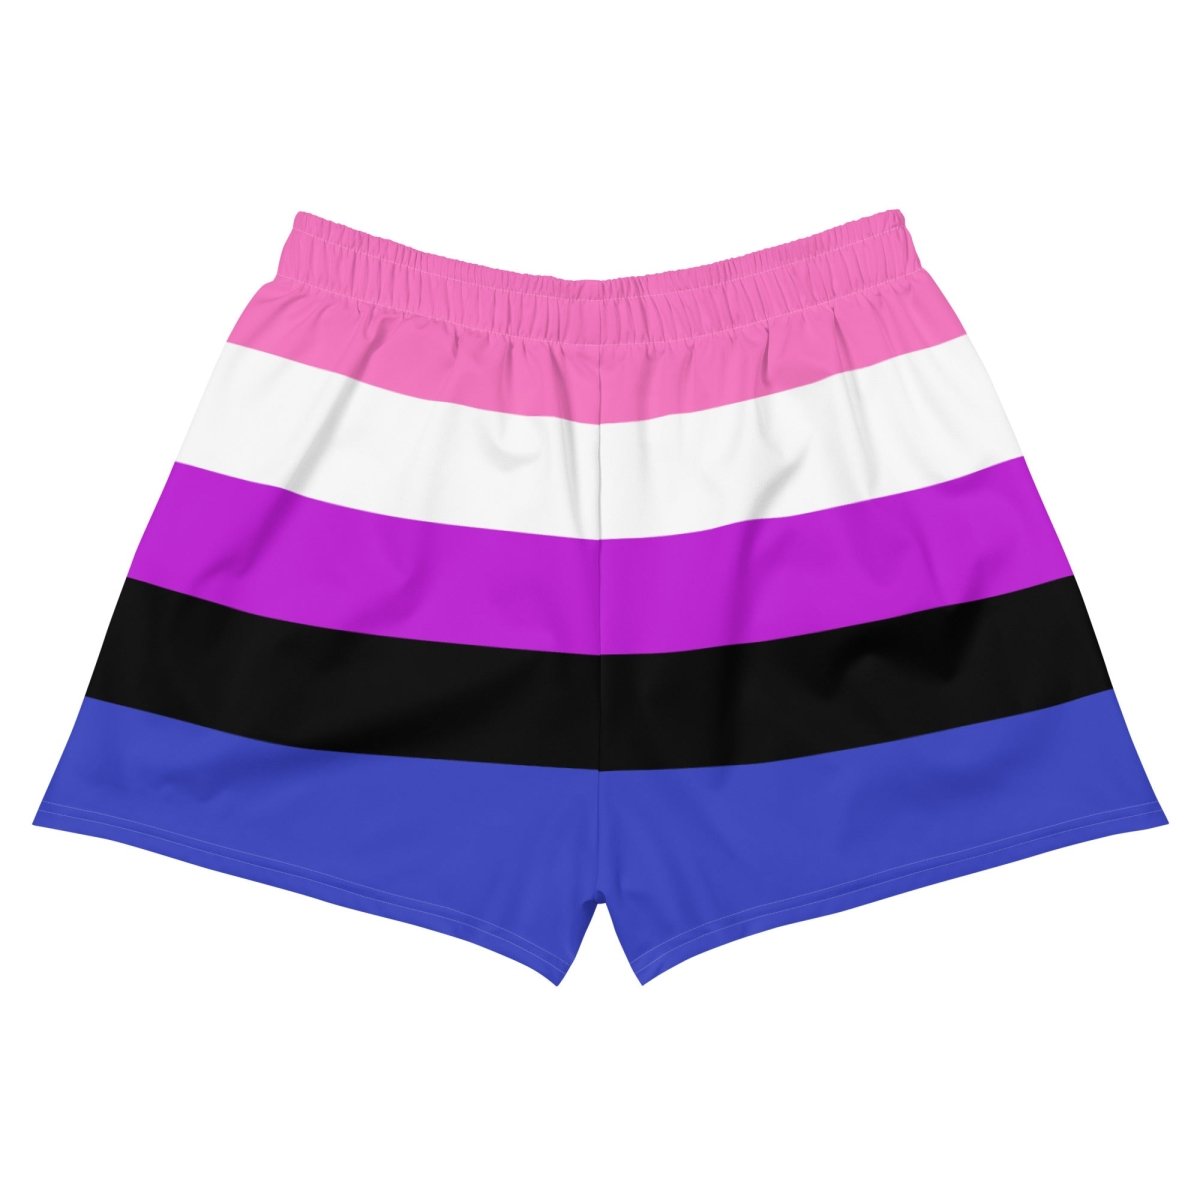 Genderfluid Flag Athletic Shorts - On Trend Shirts